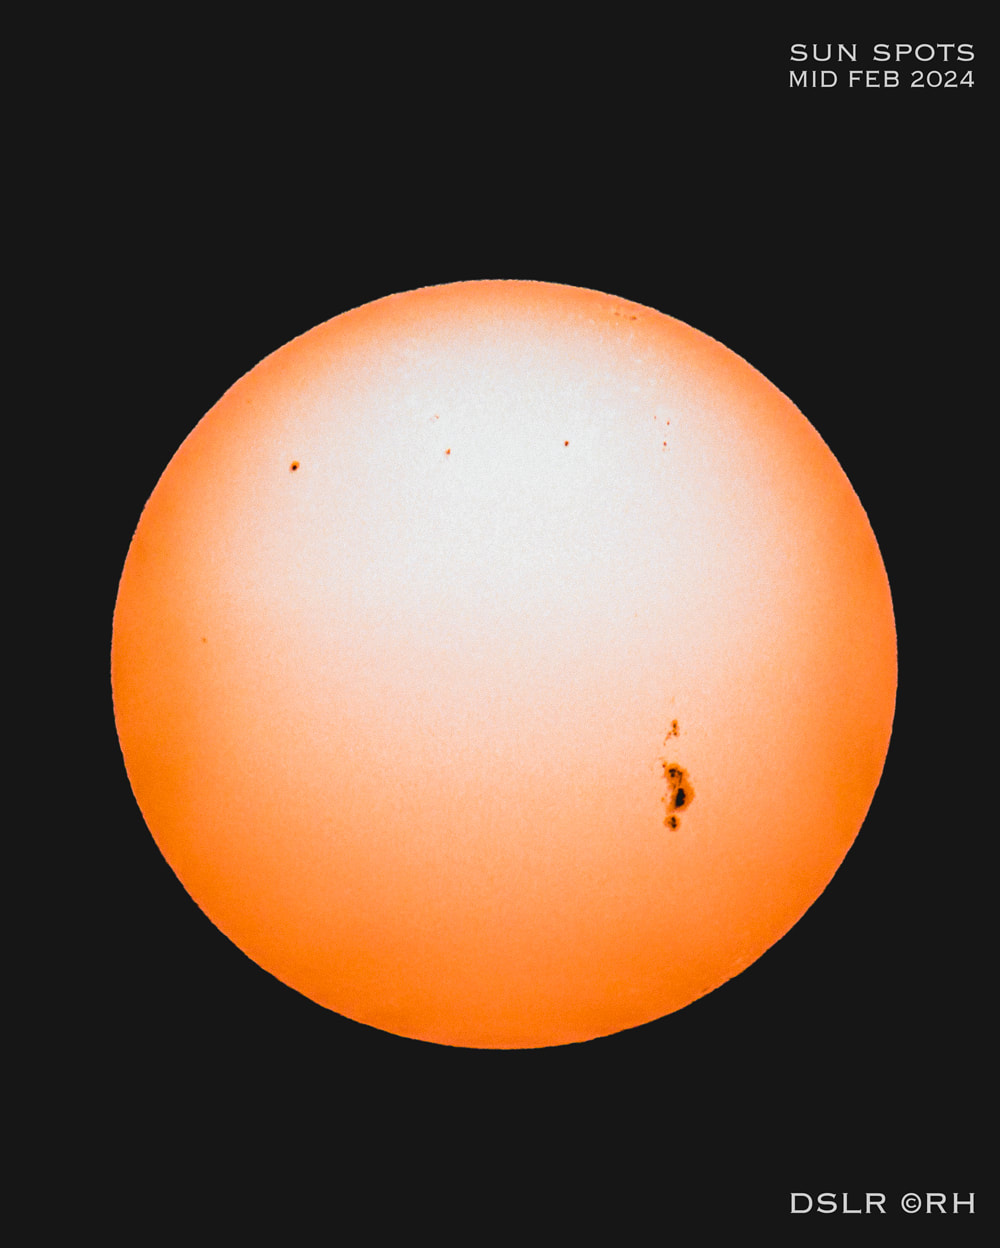 sun spots Feb 2024, DSLR image by Rick Hemi 